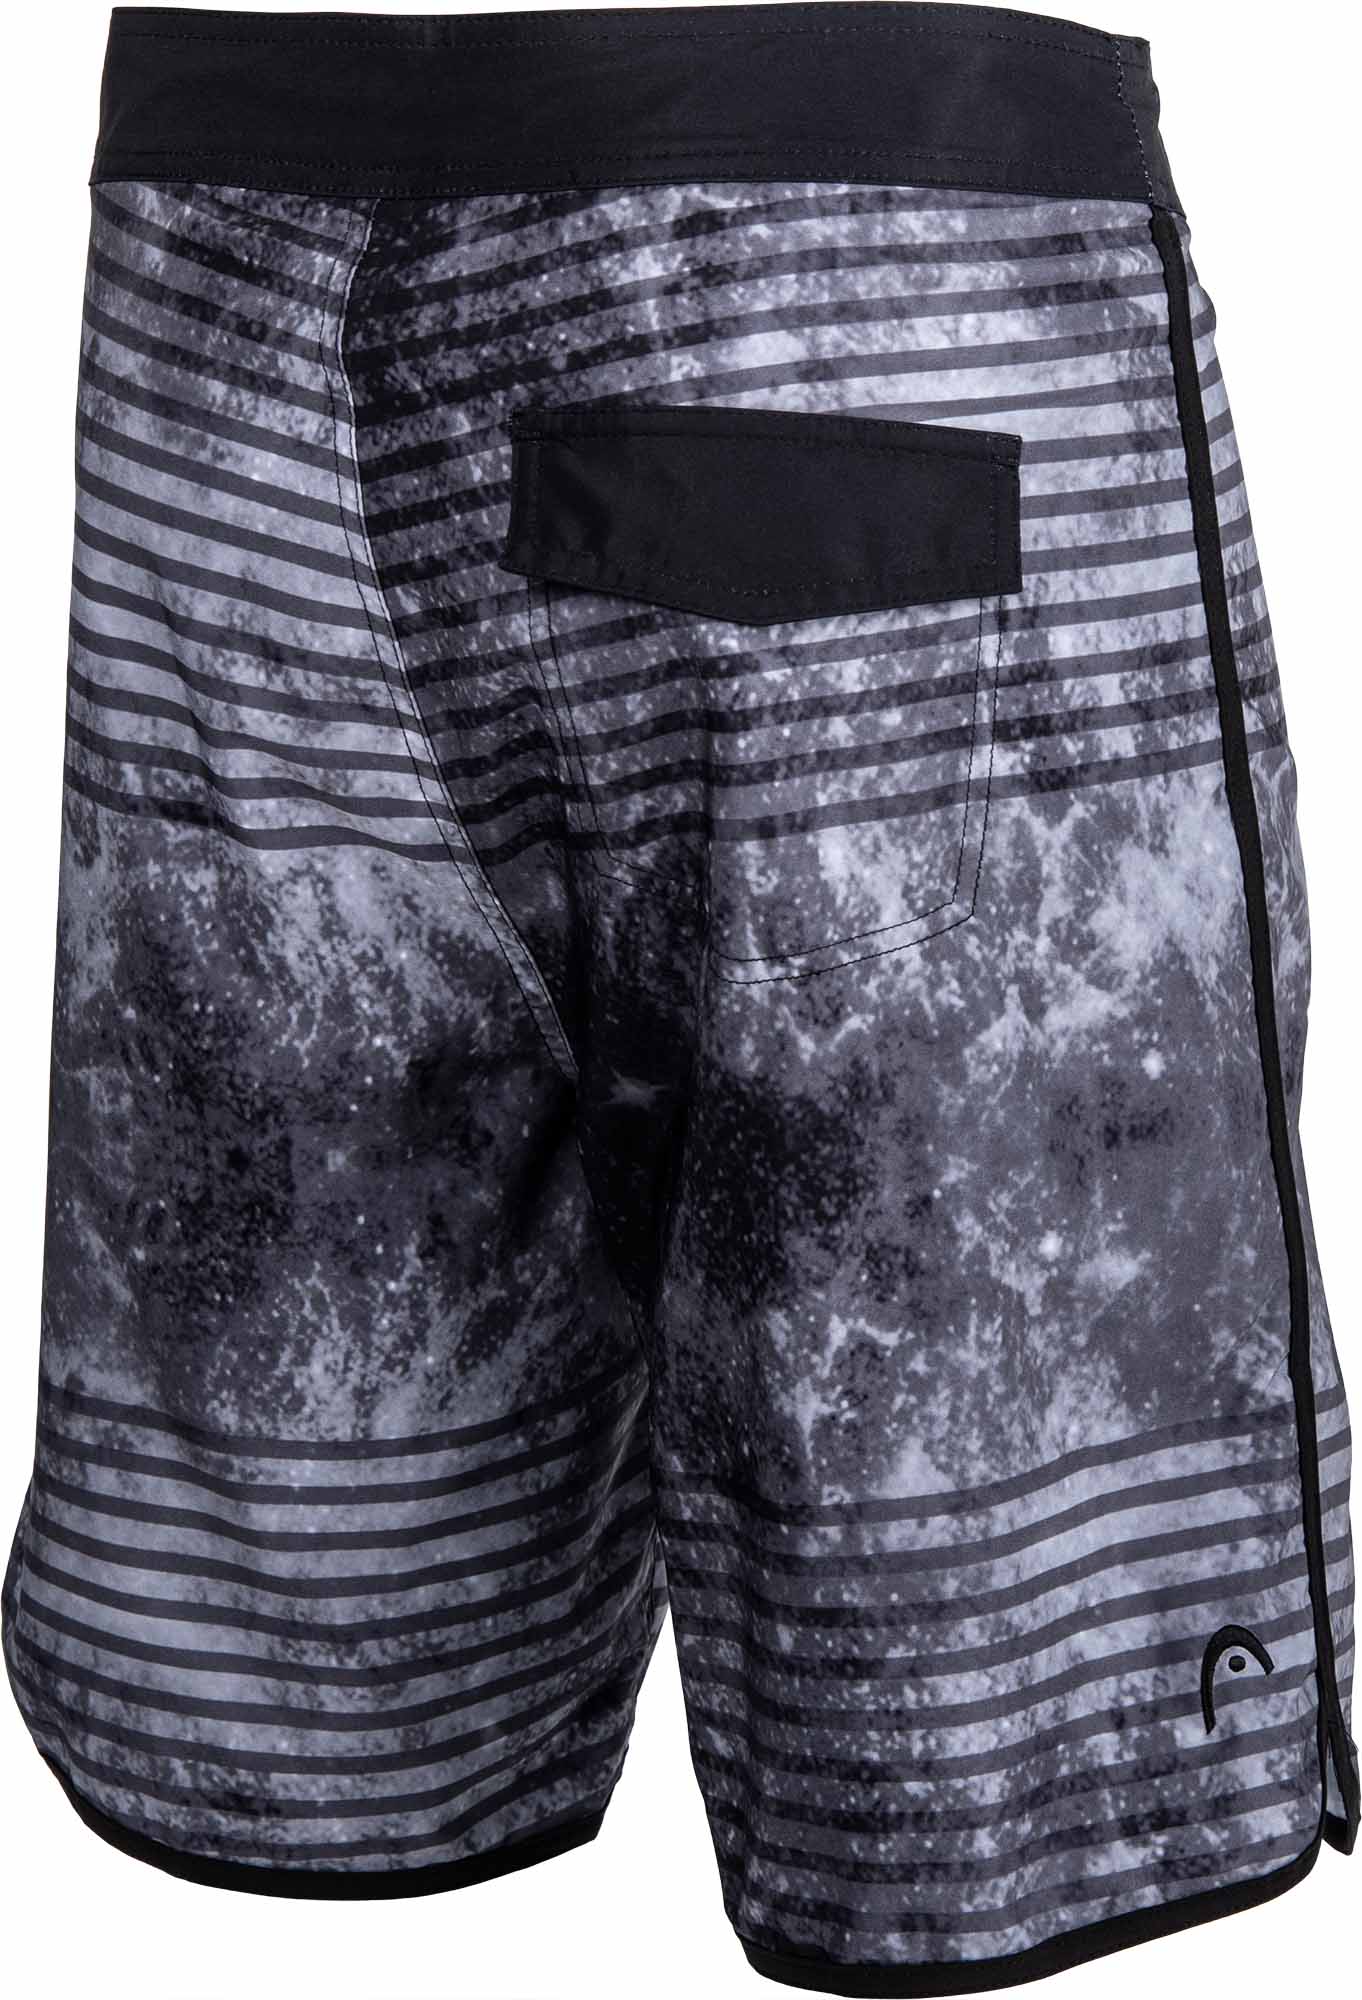 Men’s water shorts